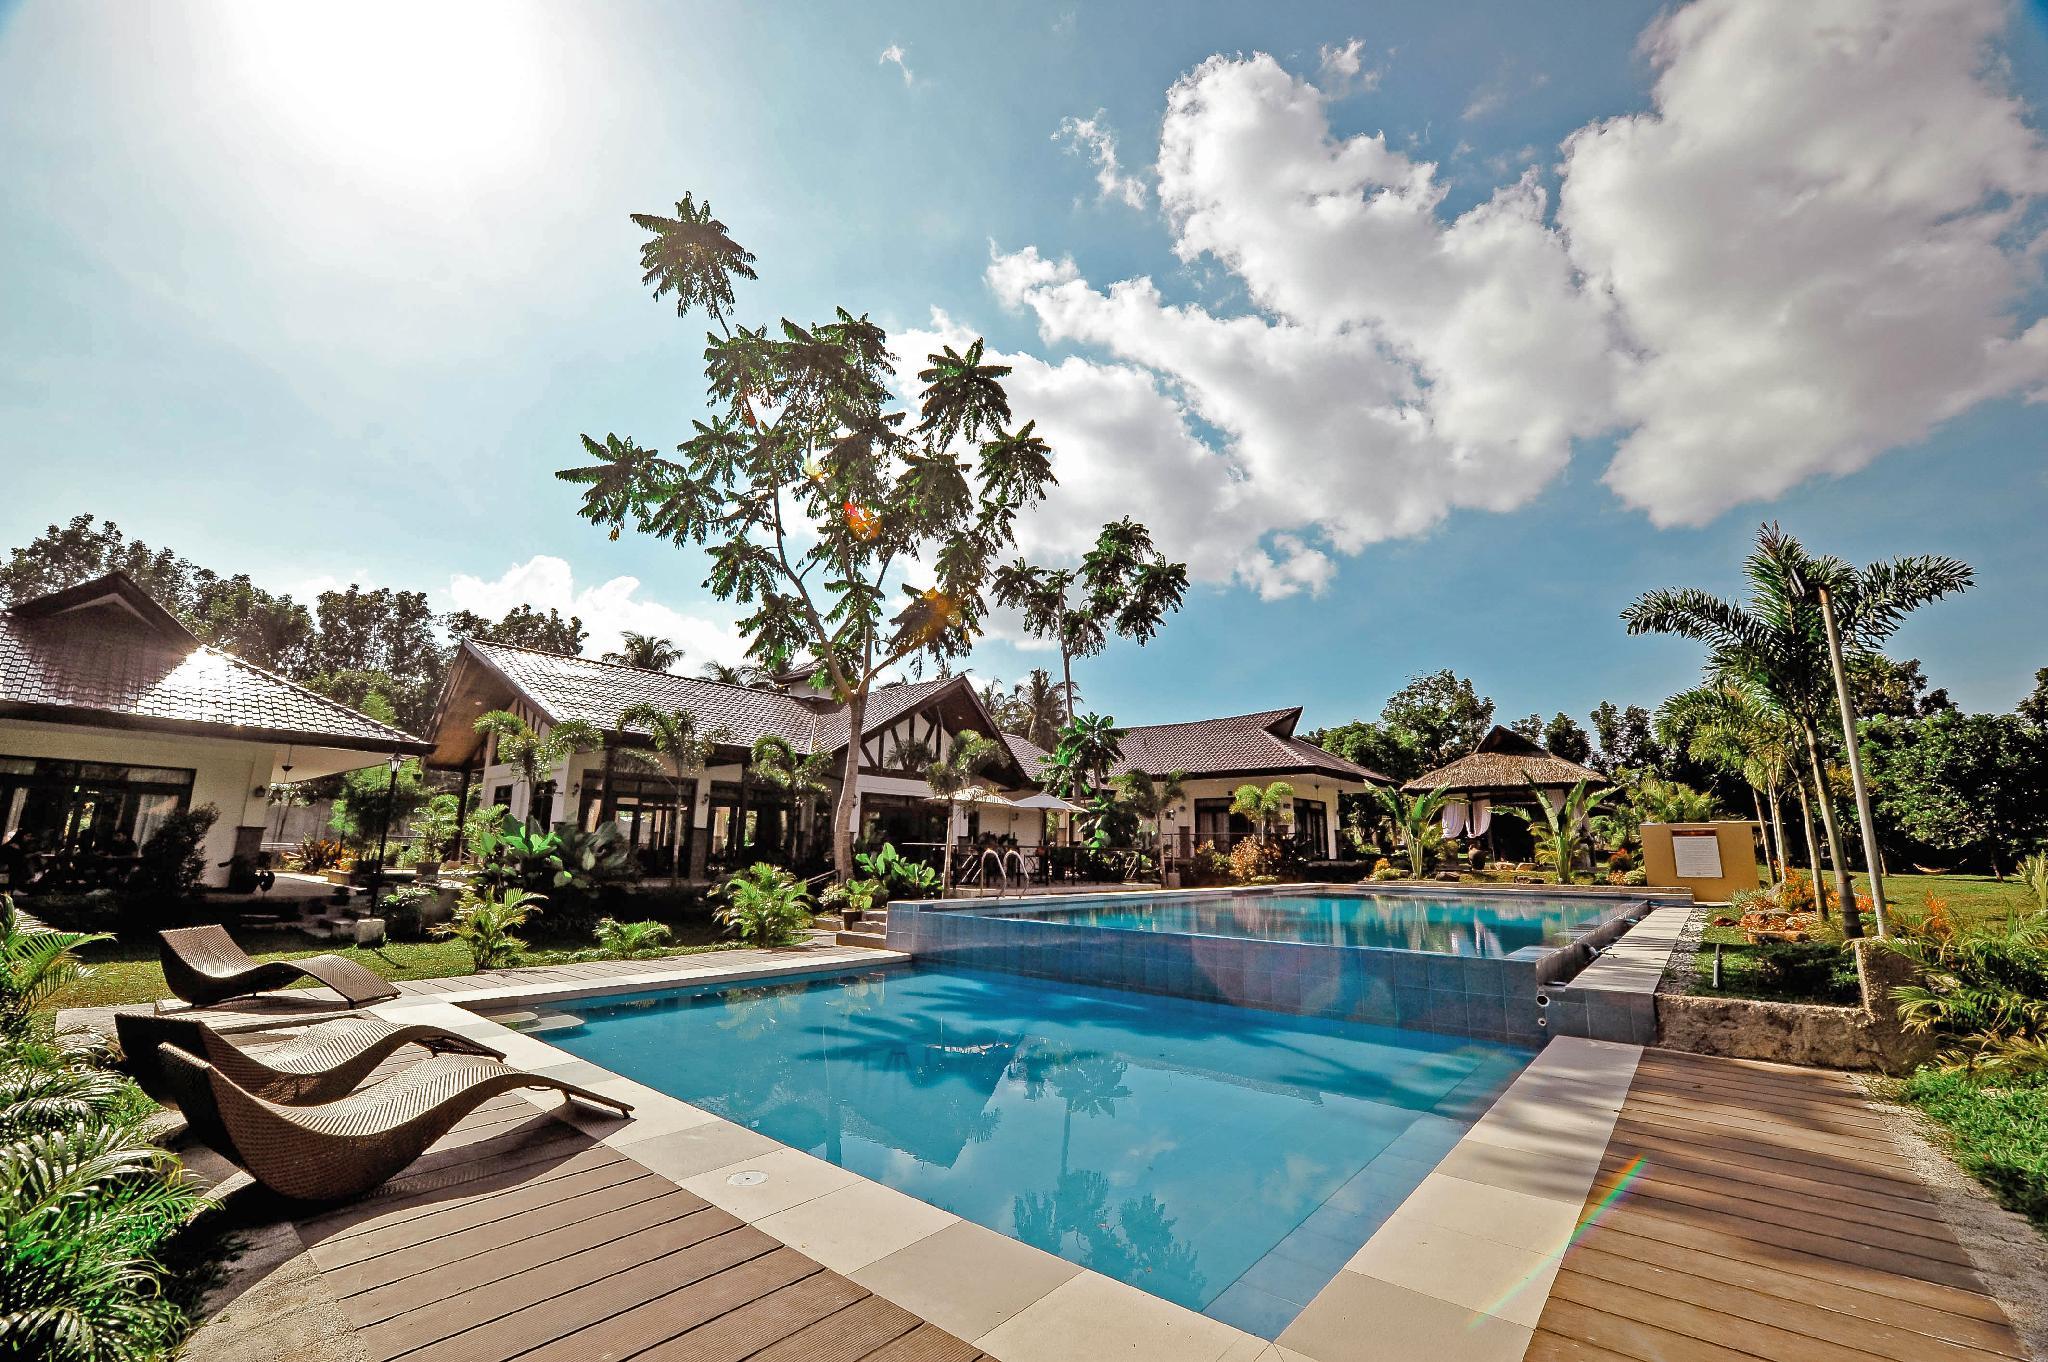 Rose Villas Resort - Lipa City, Batangas, Philippines booking and map.